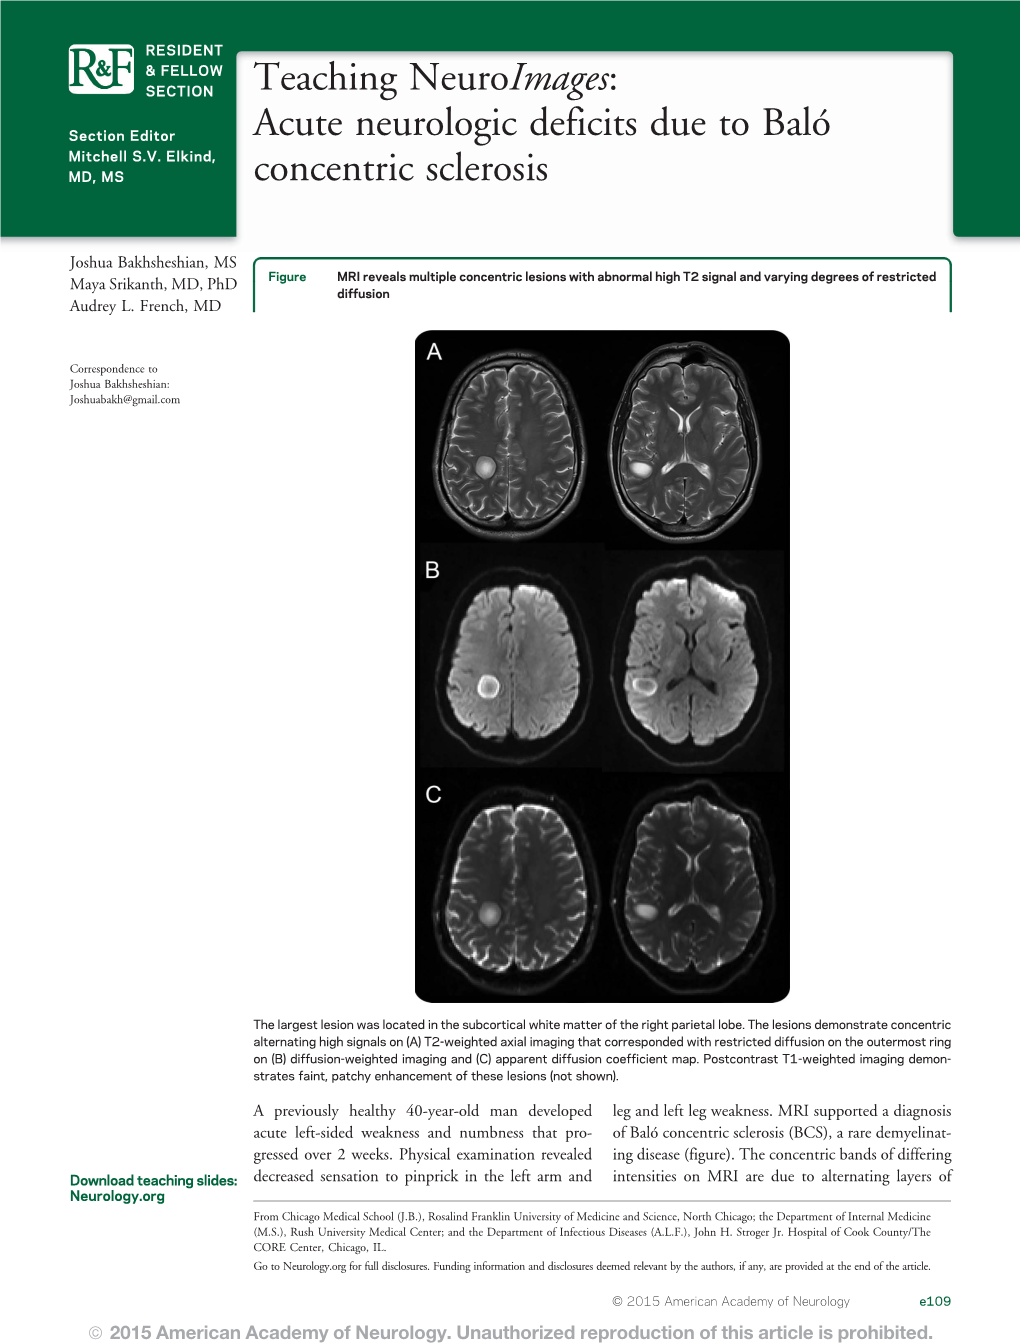 Teaching Neuroimages: Acute Neurologic Deficits Due to Baló Concentric Sclerosis Joshua Bakhsheshian, Maya Srikanth and Audrey L